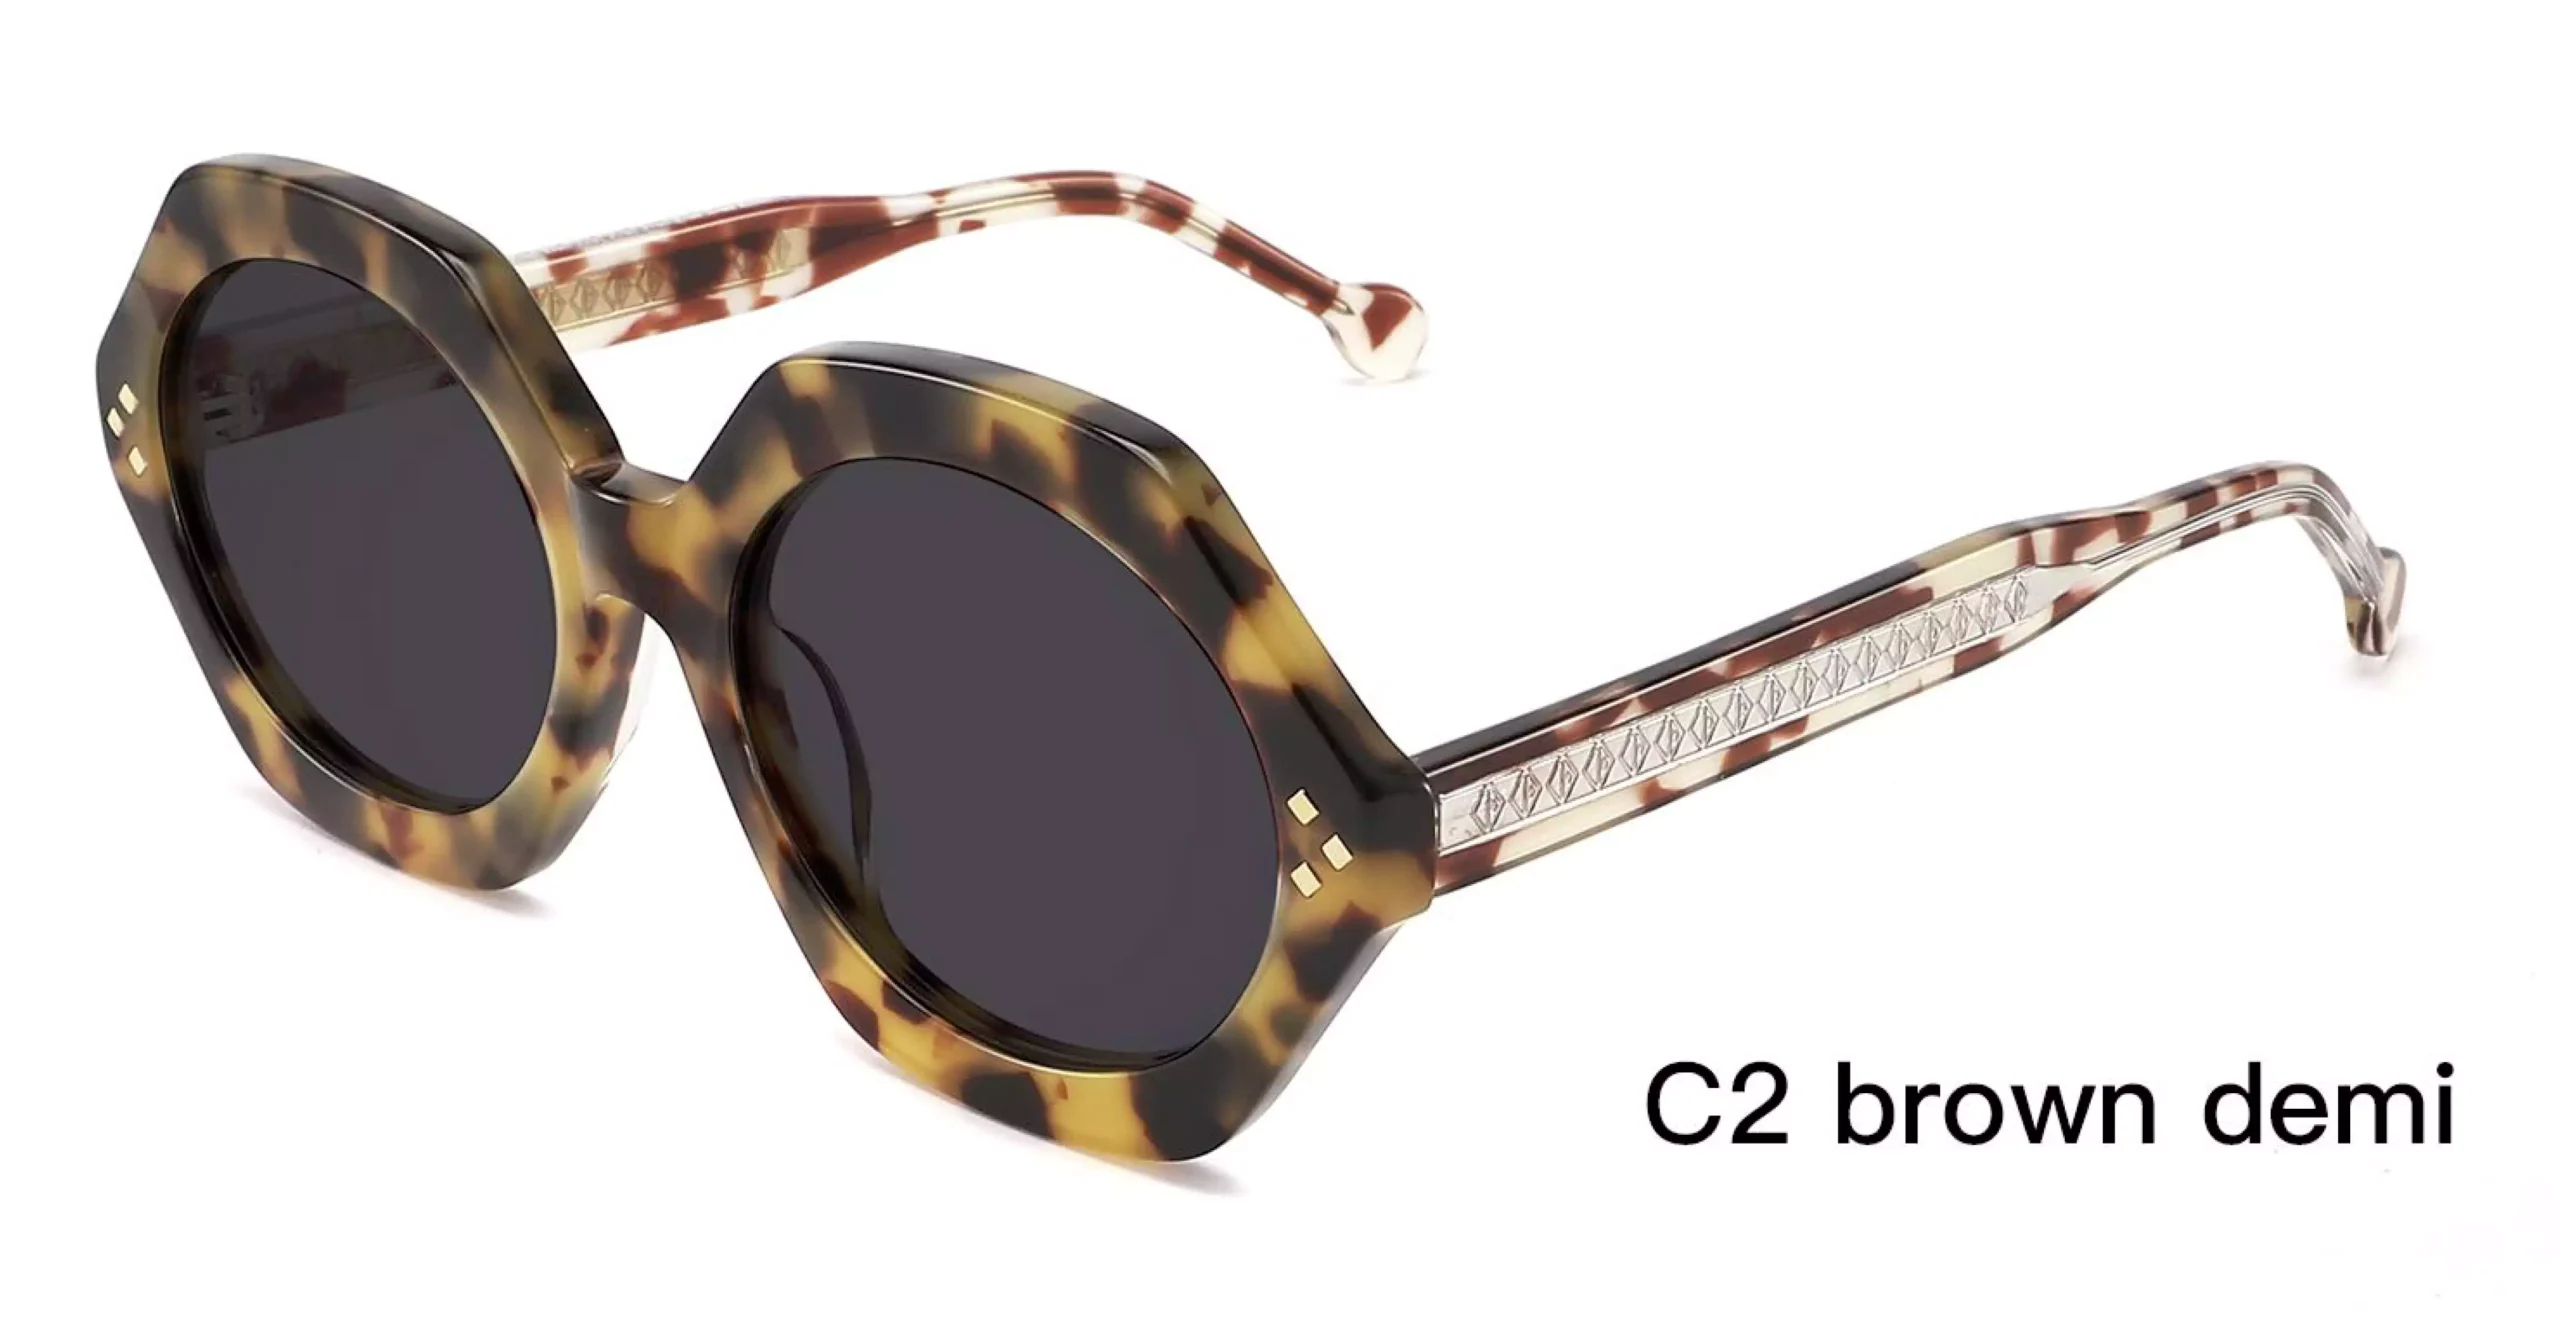 Trendy Sunglasses Wholesale, Geometric, Brown, Demi, tortoise, rivets, laser engraved wire cores, acetate sunglasses